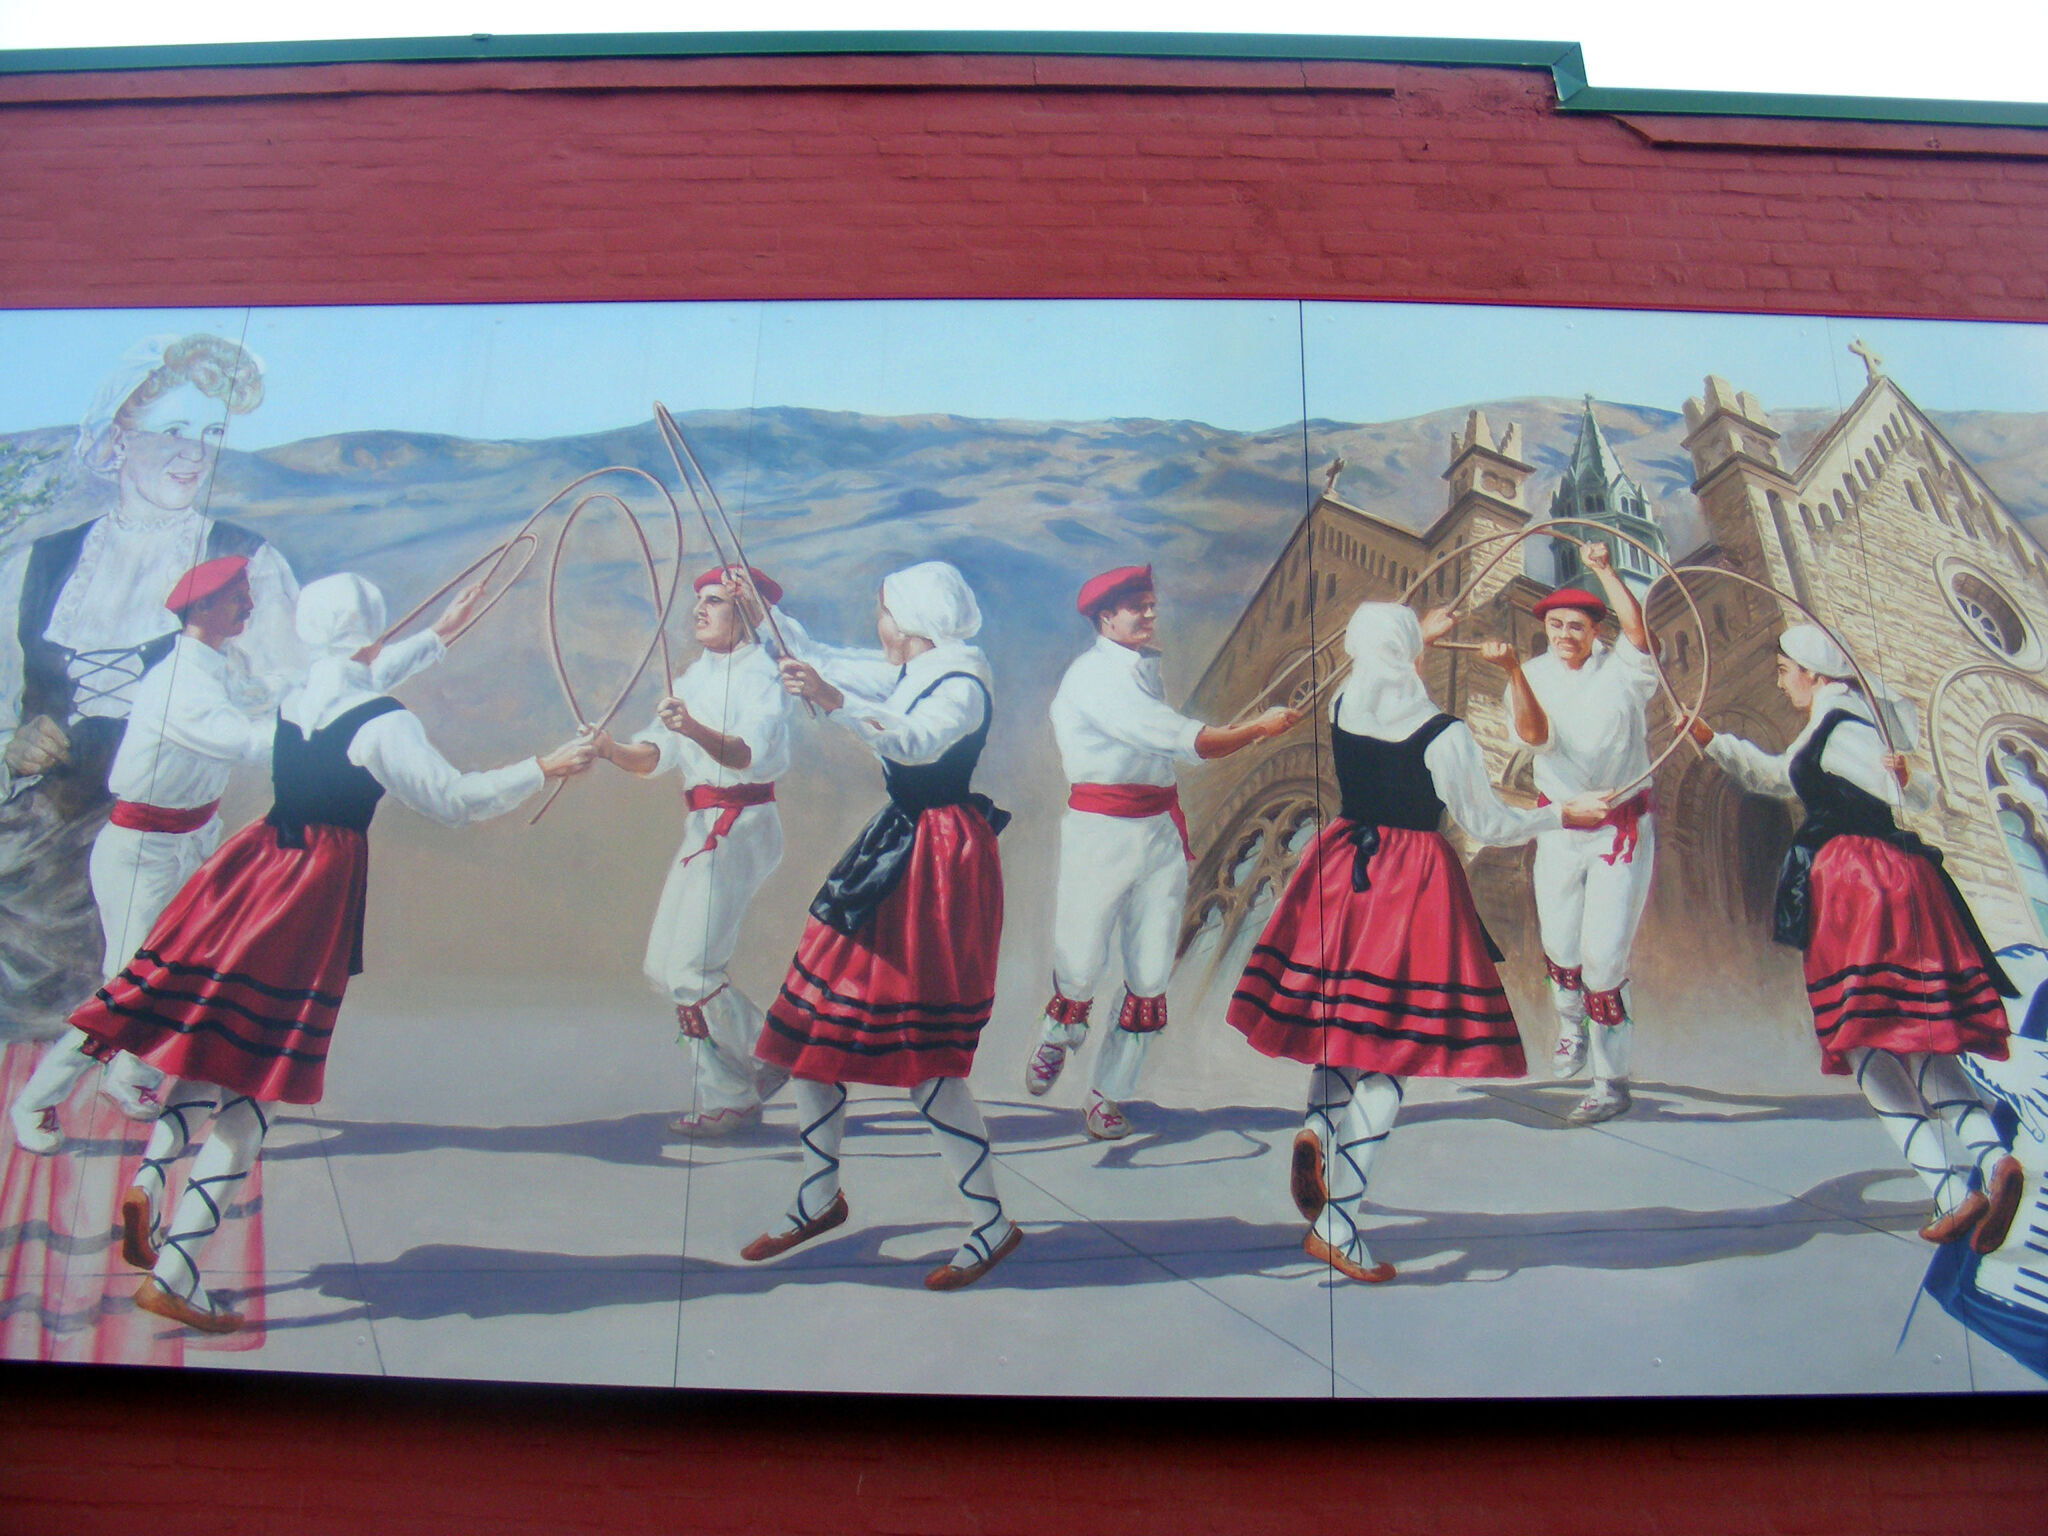 The Letterheads&mdash;The Basque Mural